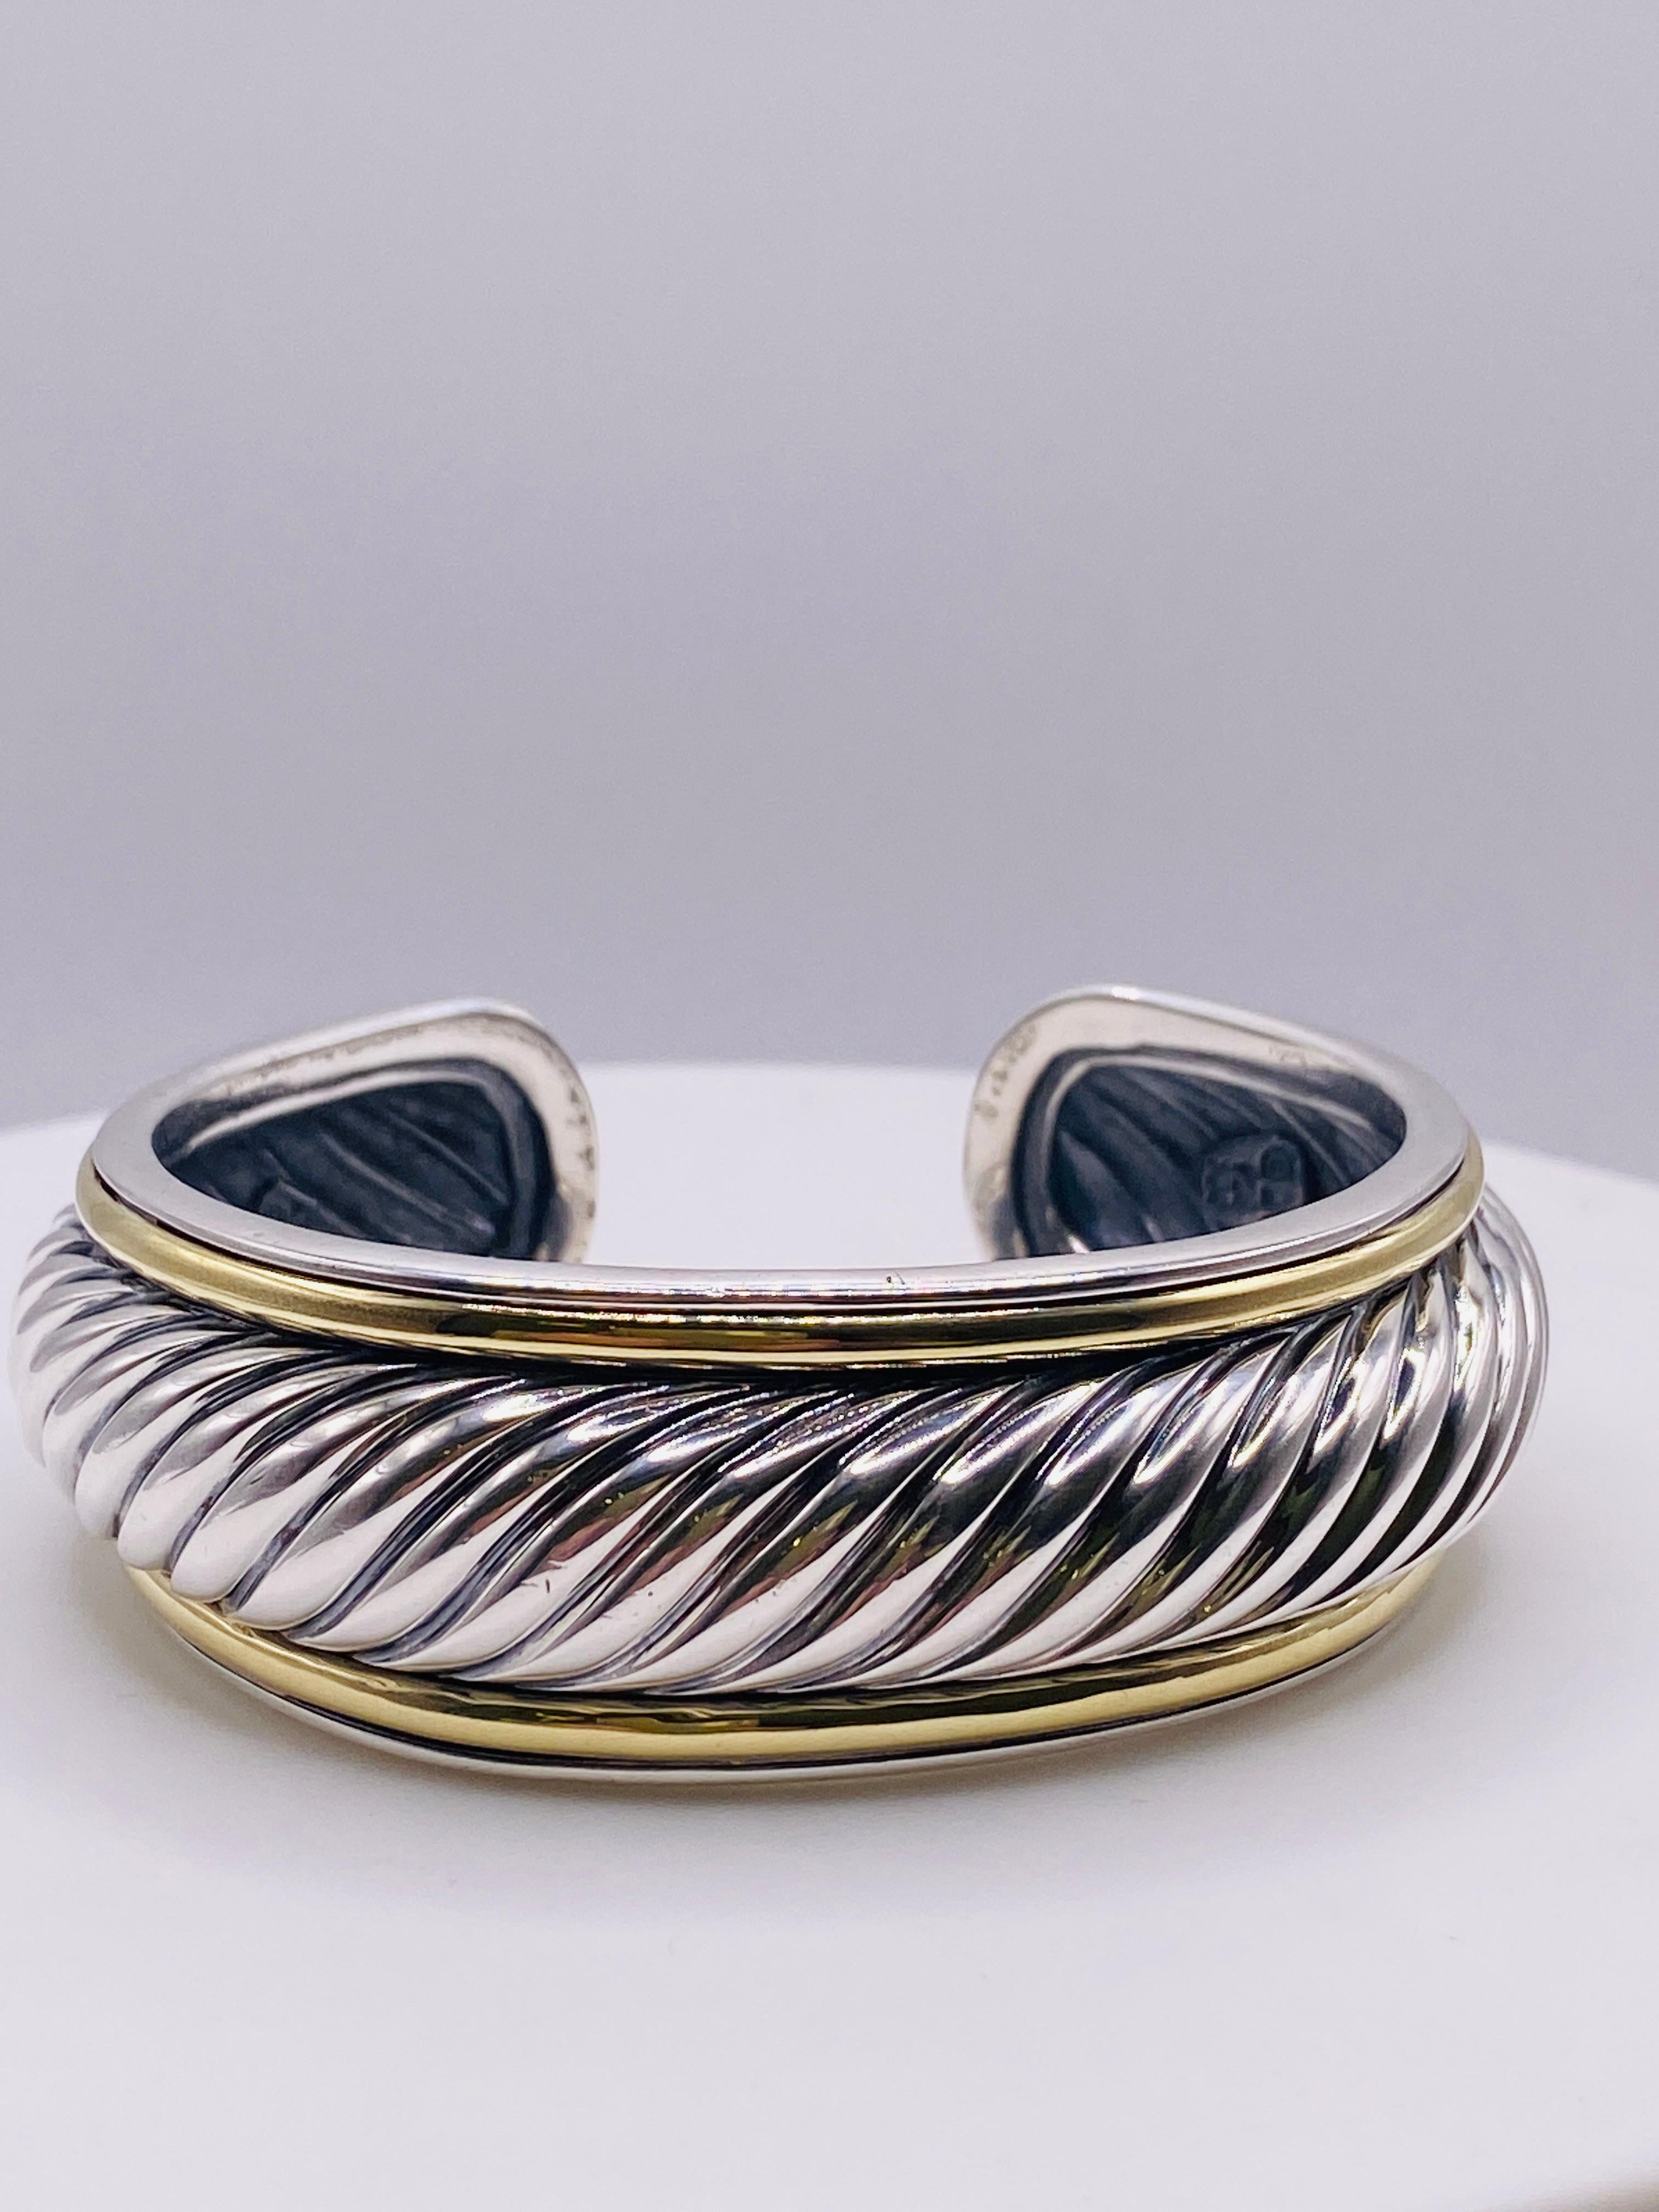 gold and silver david yurman bracelet